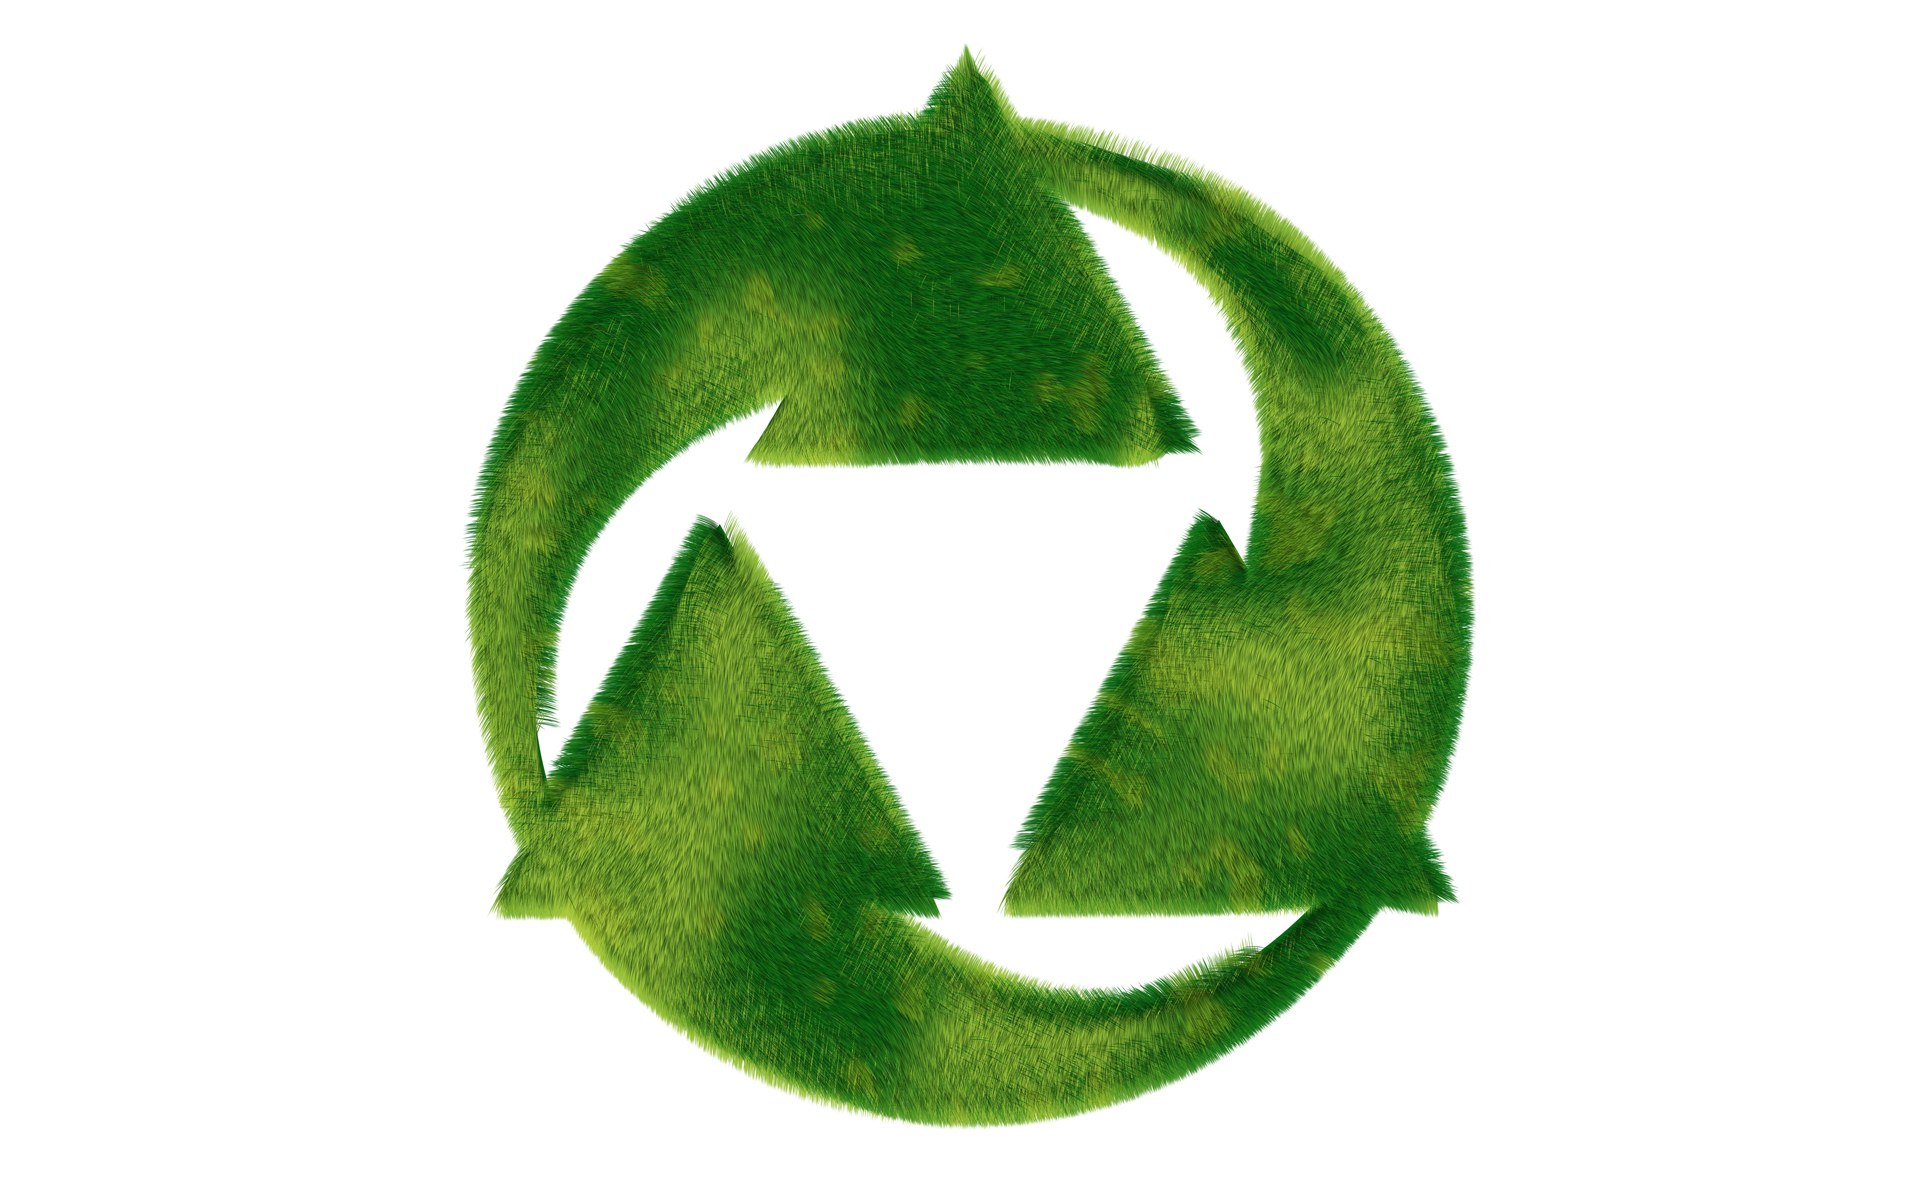 Greenpeace Symbols Recycle World Resolution 1366x768 74753 on ...